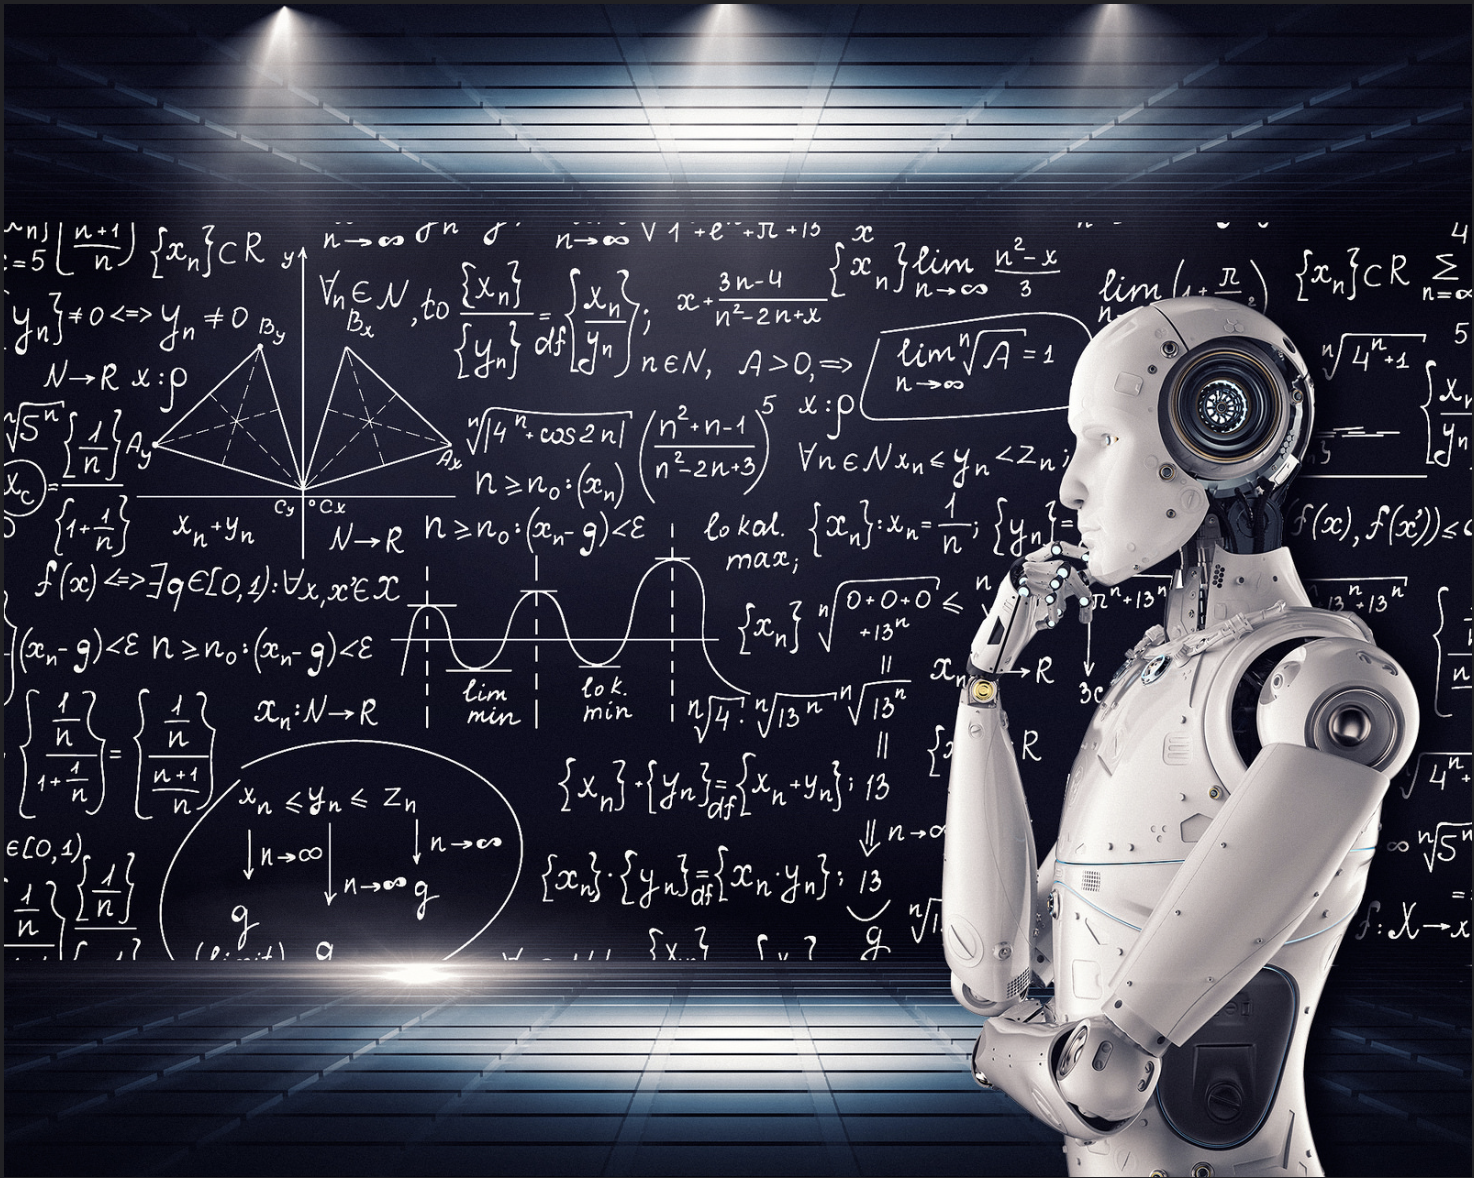 Will Translators of the Future Be Robots?